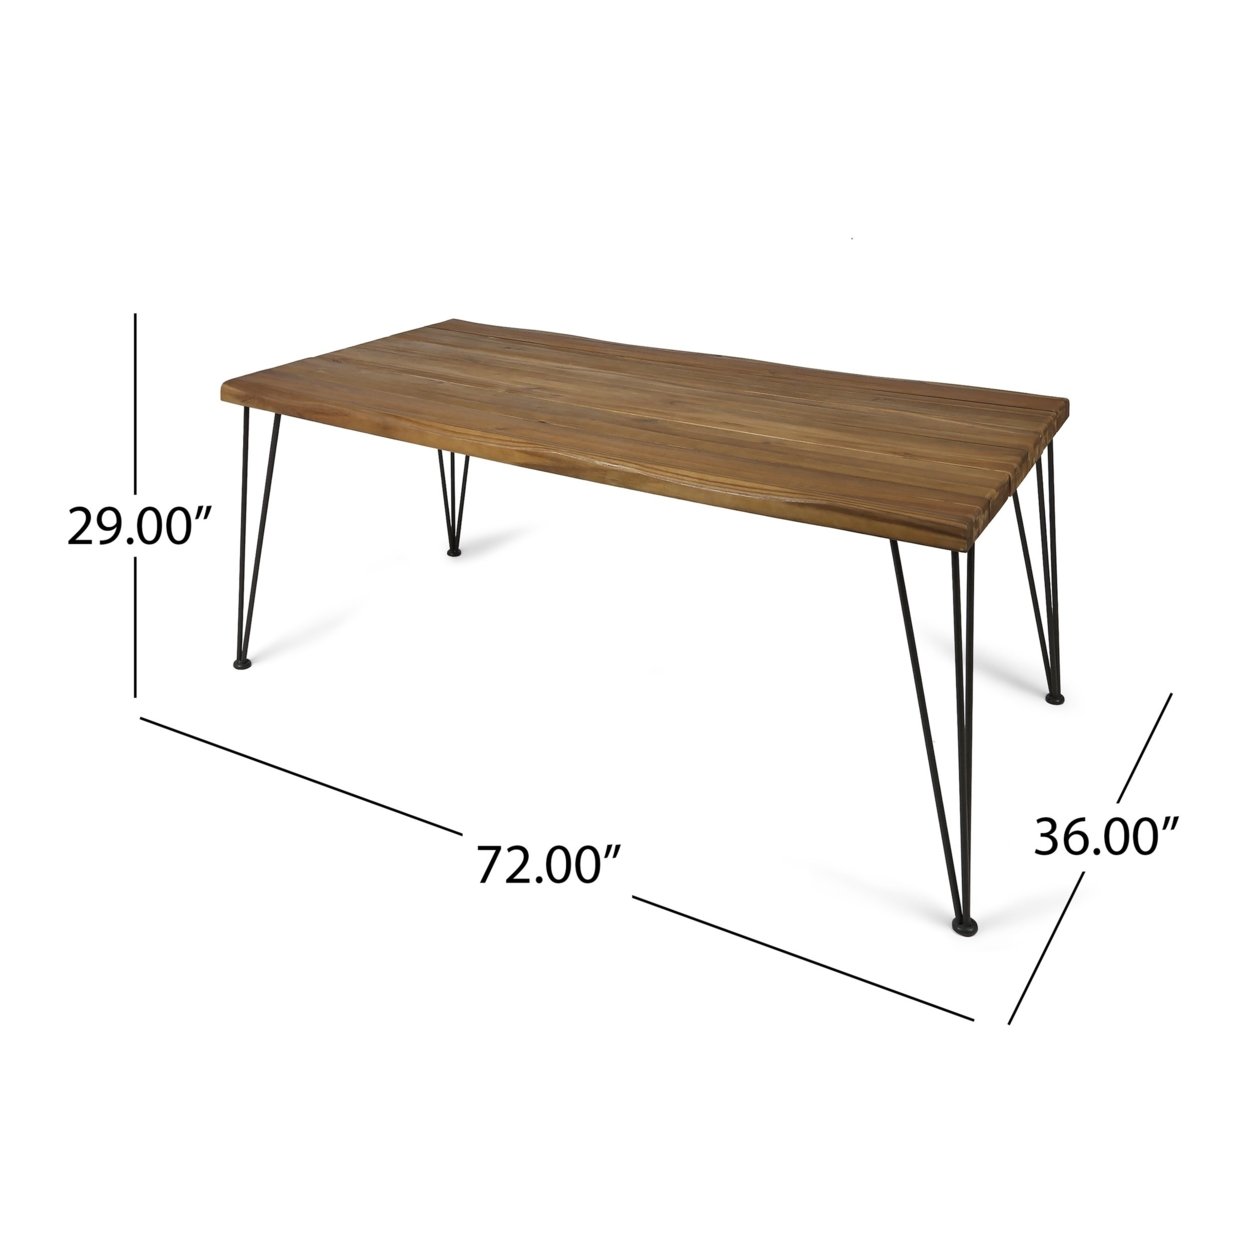 Kama Indoor Dining Table, Rectangular, 72, Acacia Wood Table Top, Rustic Iron Hairpin Legs, Teak Finish